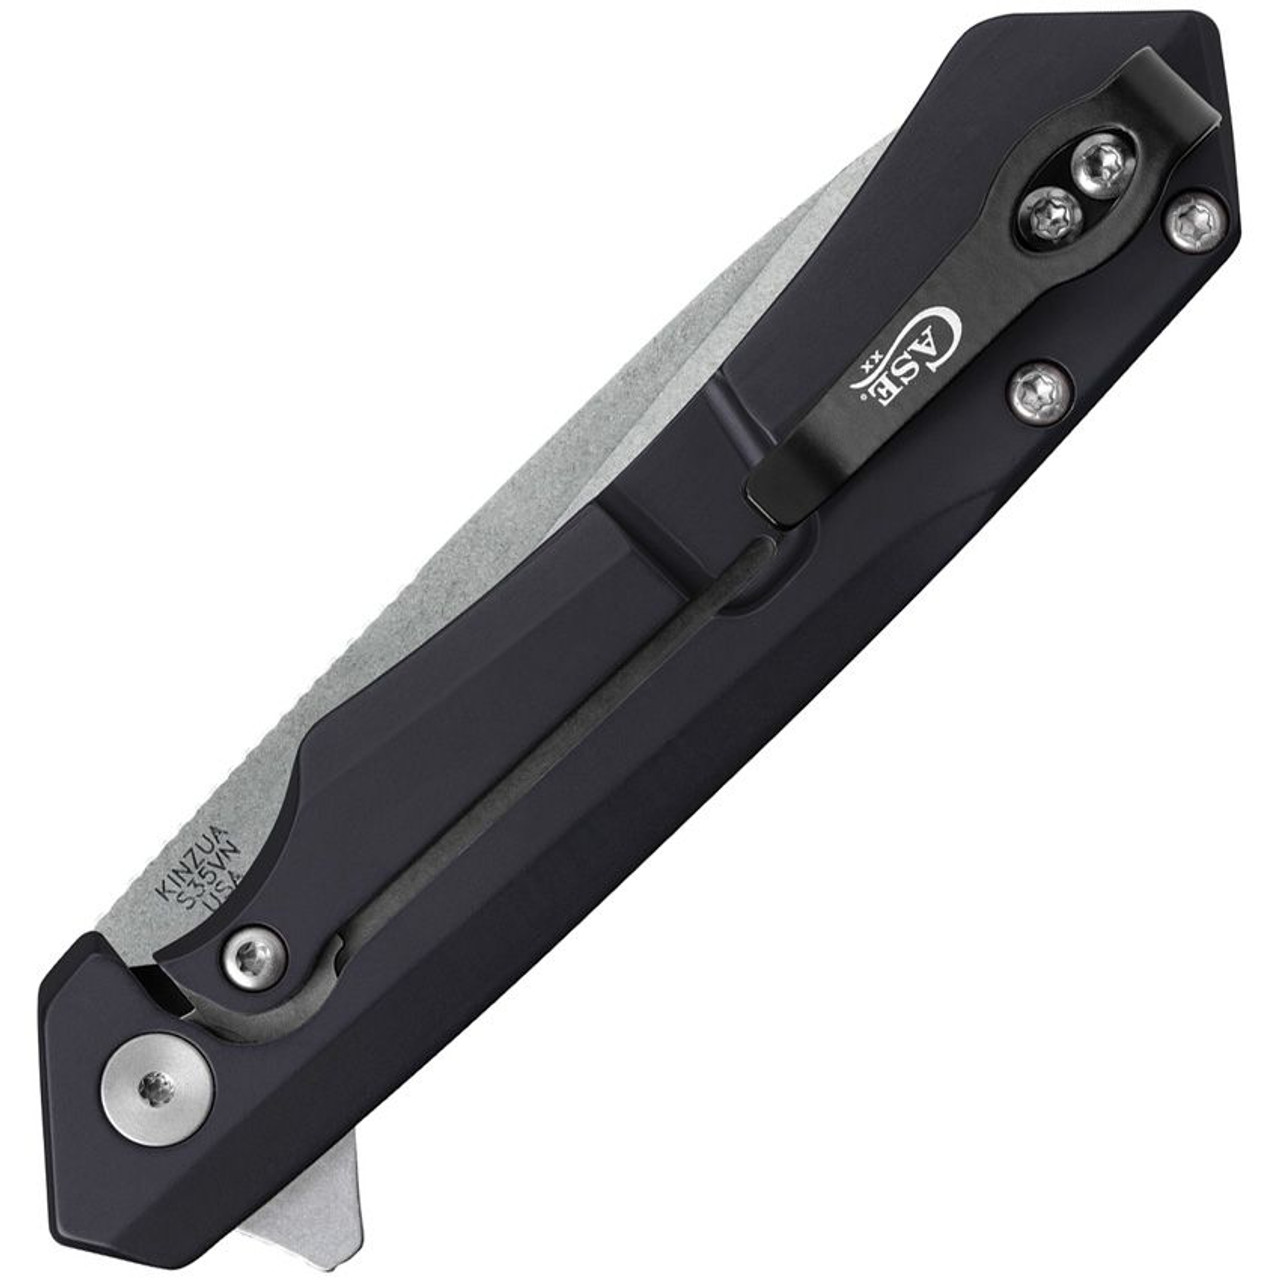 Case Kinzua Flipper Knife (64688) - 3.4" CPM-S35VN Spear Point Blade, Black Textured Anodized Aluminum Handle